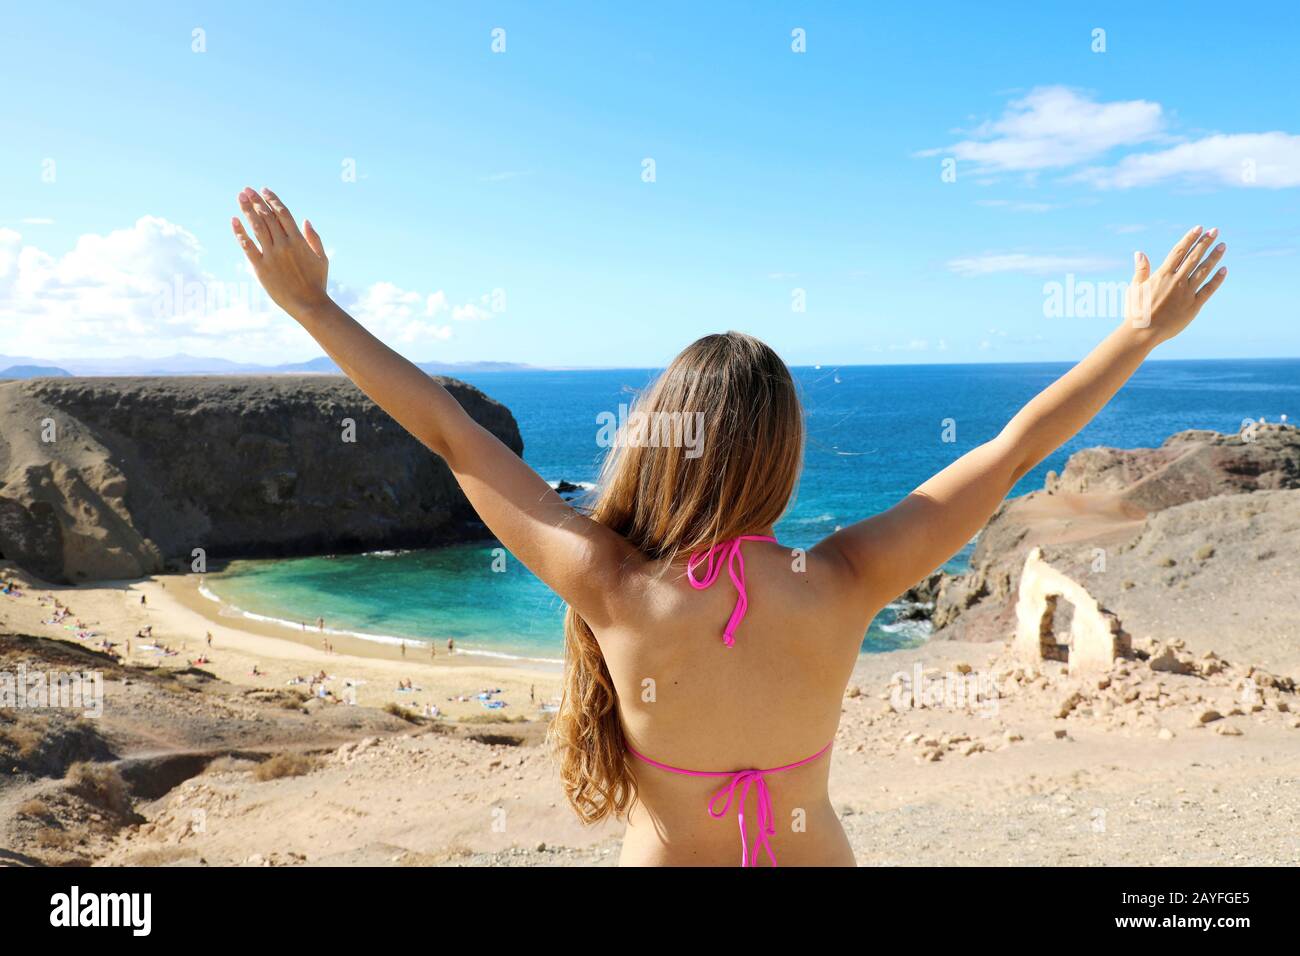 Spain woman bikini beach hi-res stock photography and images - Alamy